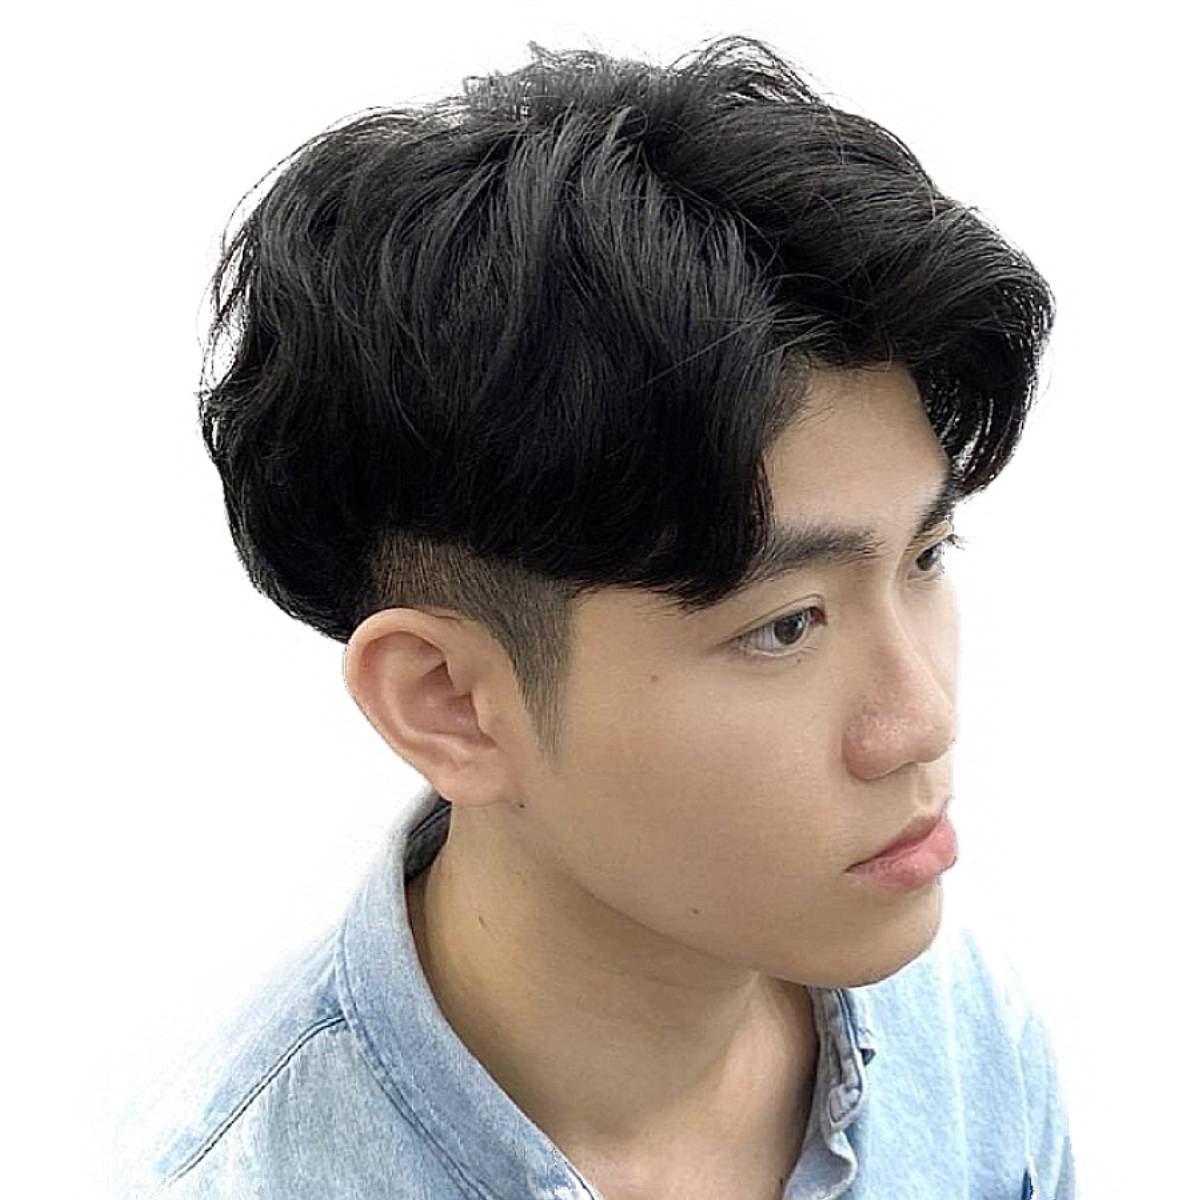 Creatrip: The Most Popular Men's Hairstyles In Korea In 2021